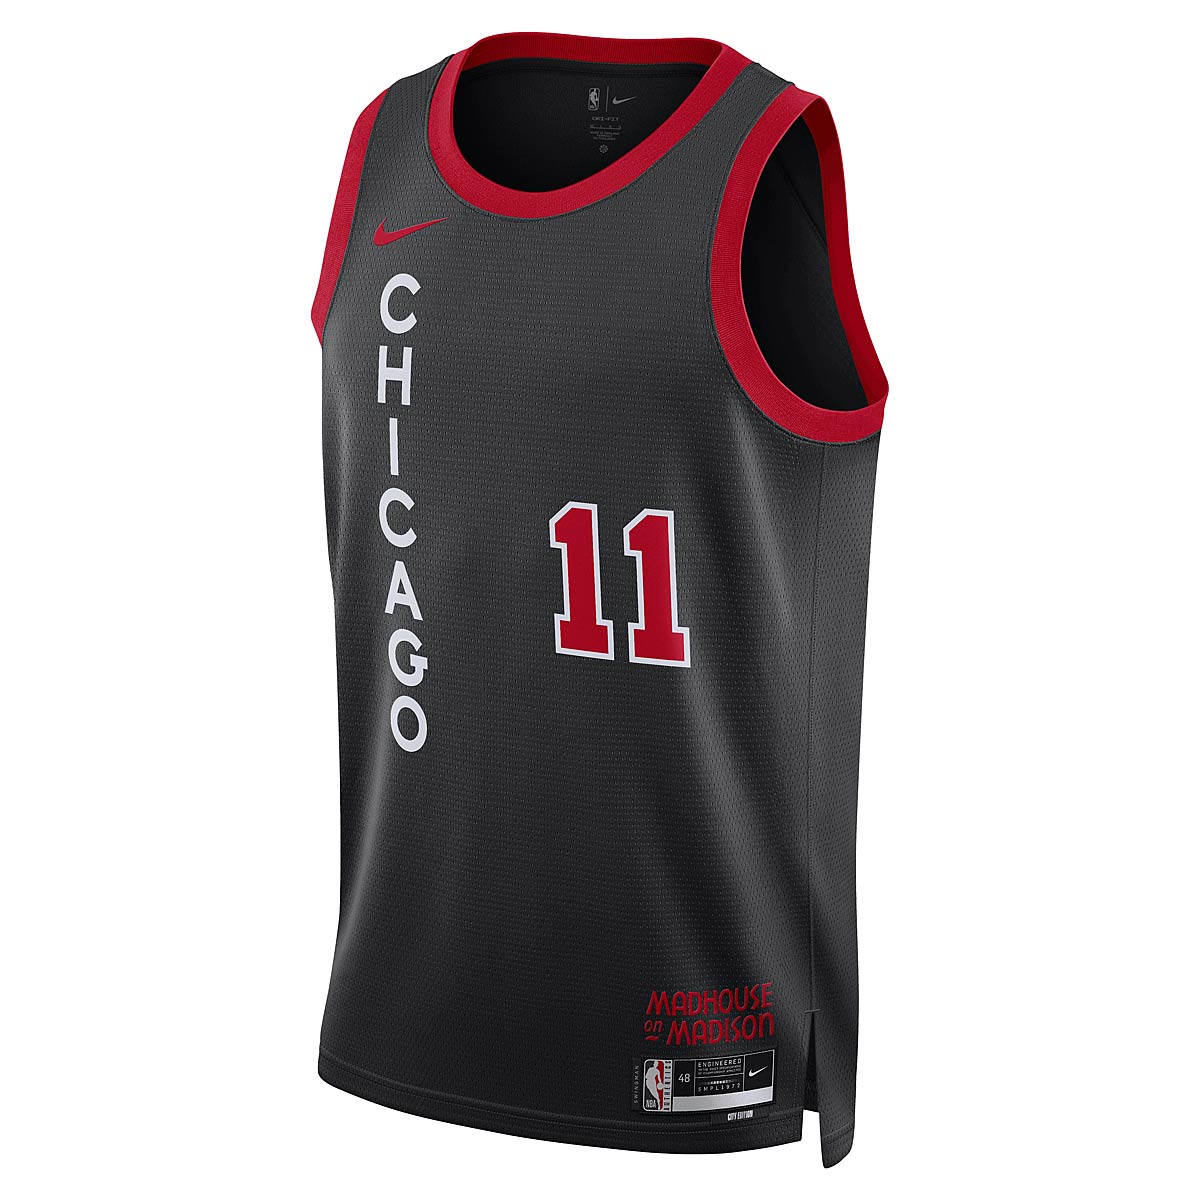 Nike NBA Chicago Bulls Dri-fit City Edition Swingman Jersey Demar Derozan, Schwarz/university Rot/schwarz L